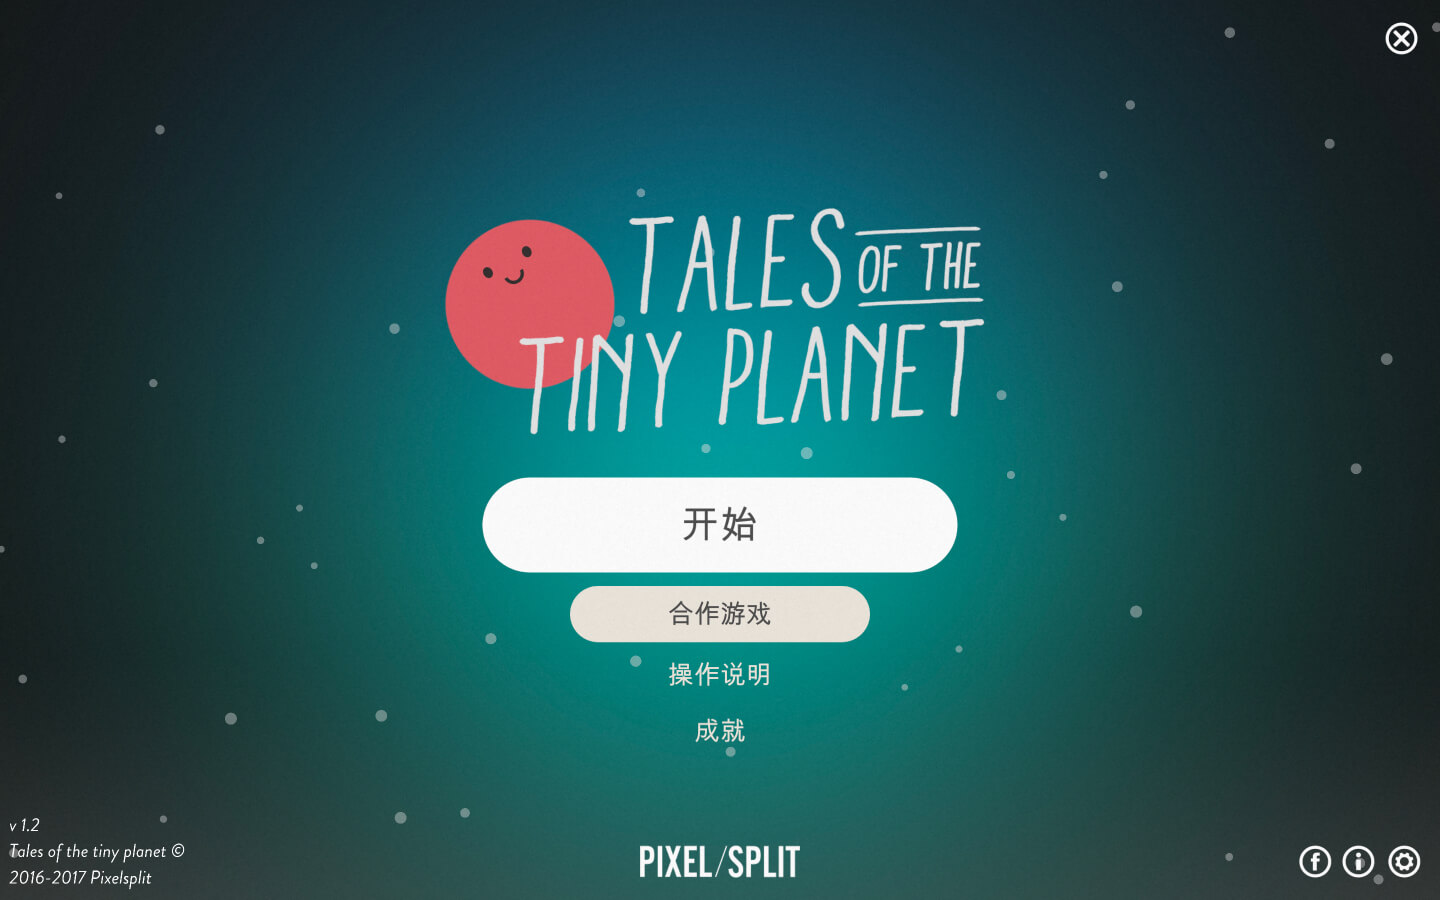 小小星球的故事 Tales of the Tiny Planet for Mac v1.2.1a 中文原生版-1